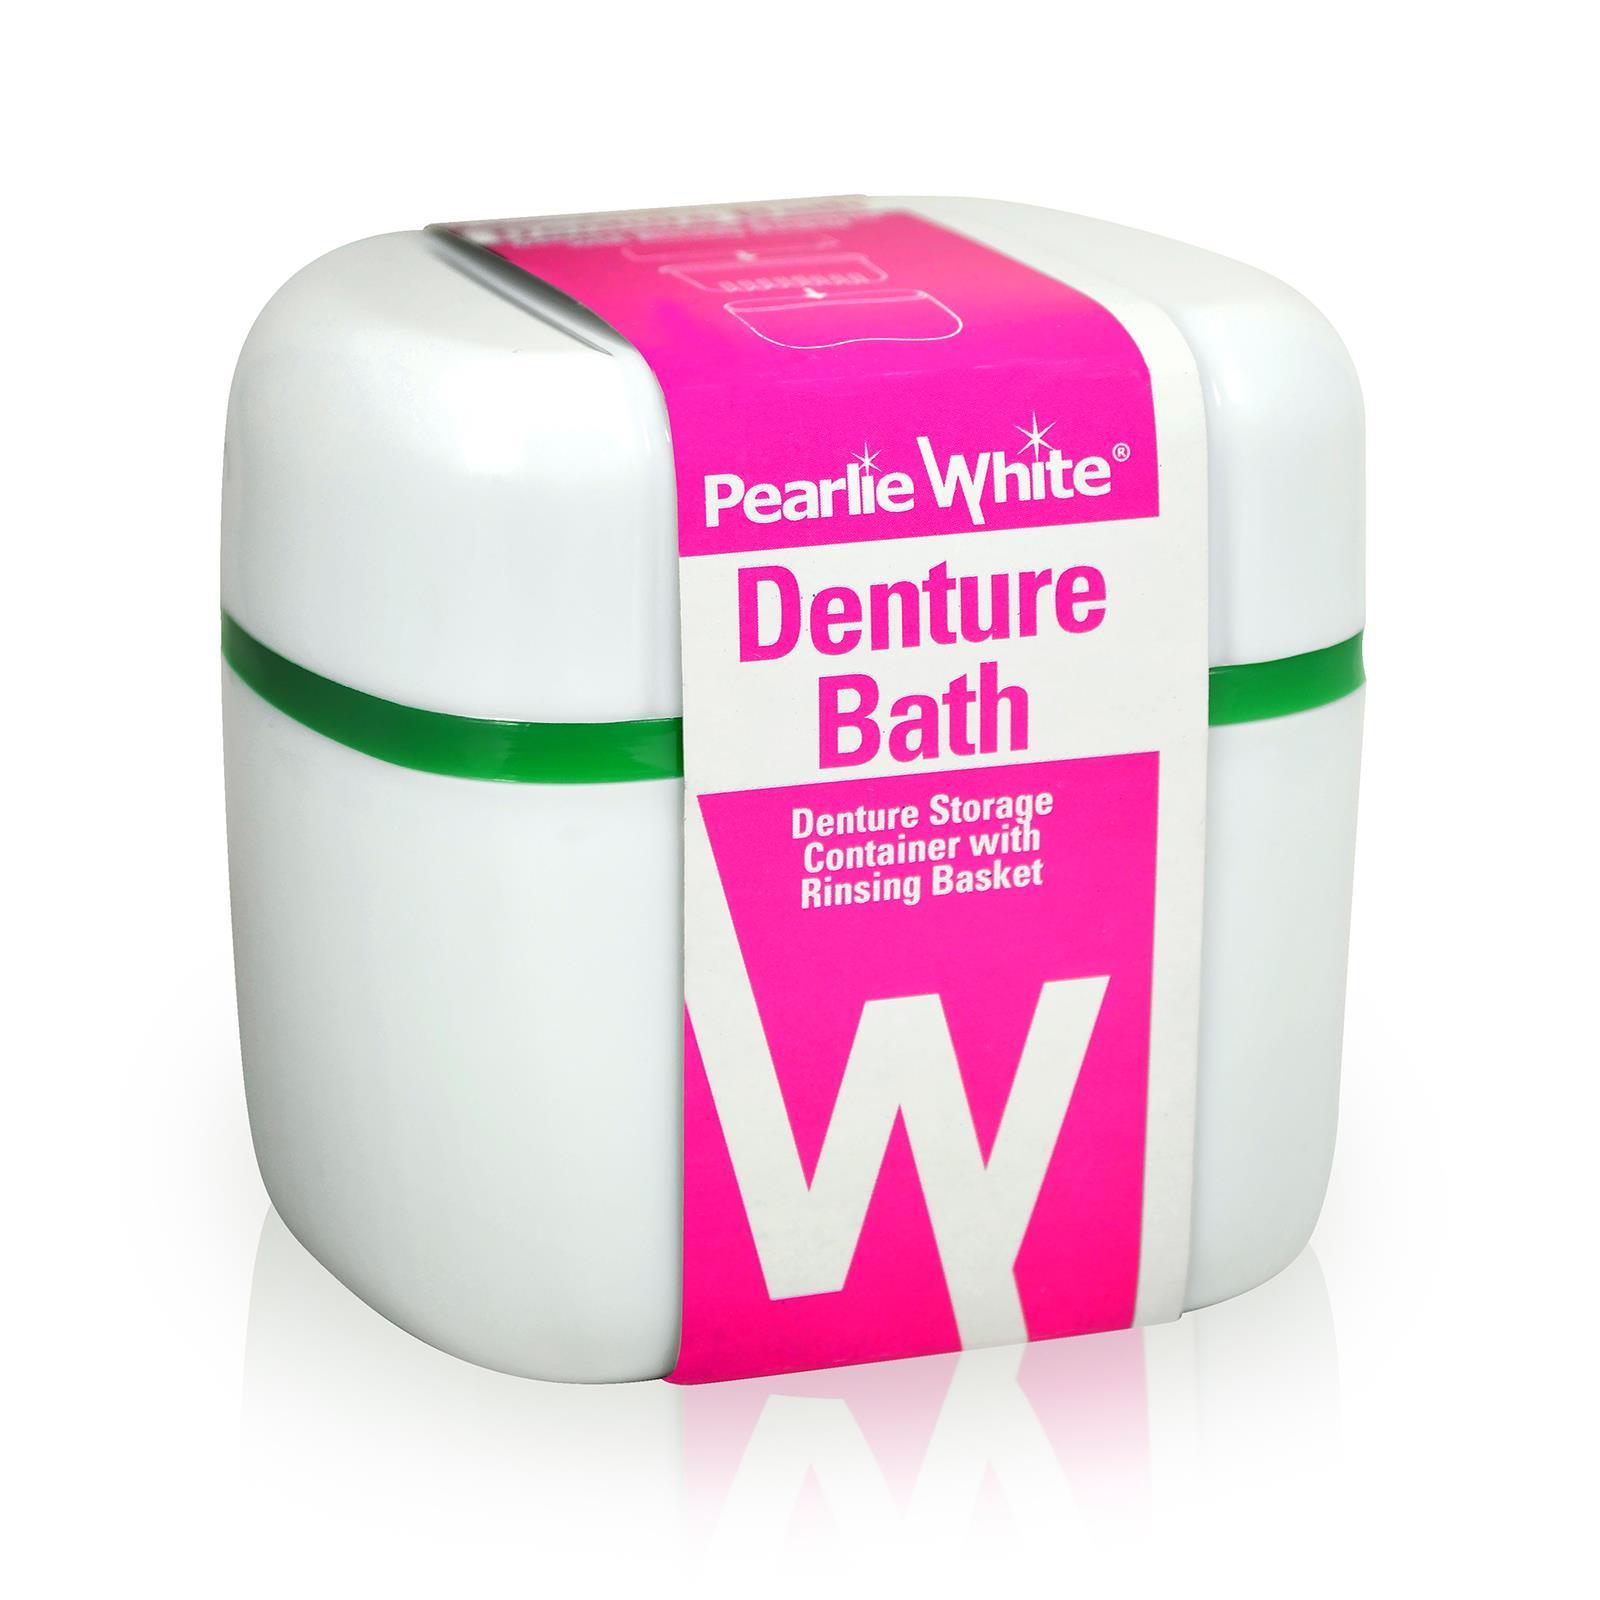 Denture Bath | Denture Container With Rinsing Basket | Little Baby.